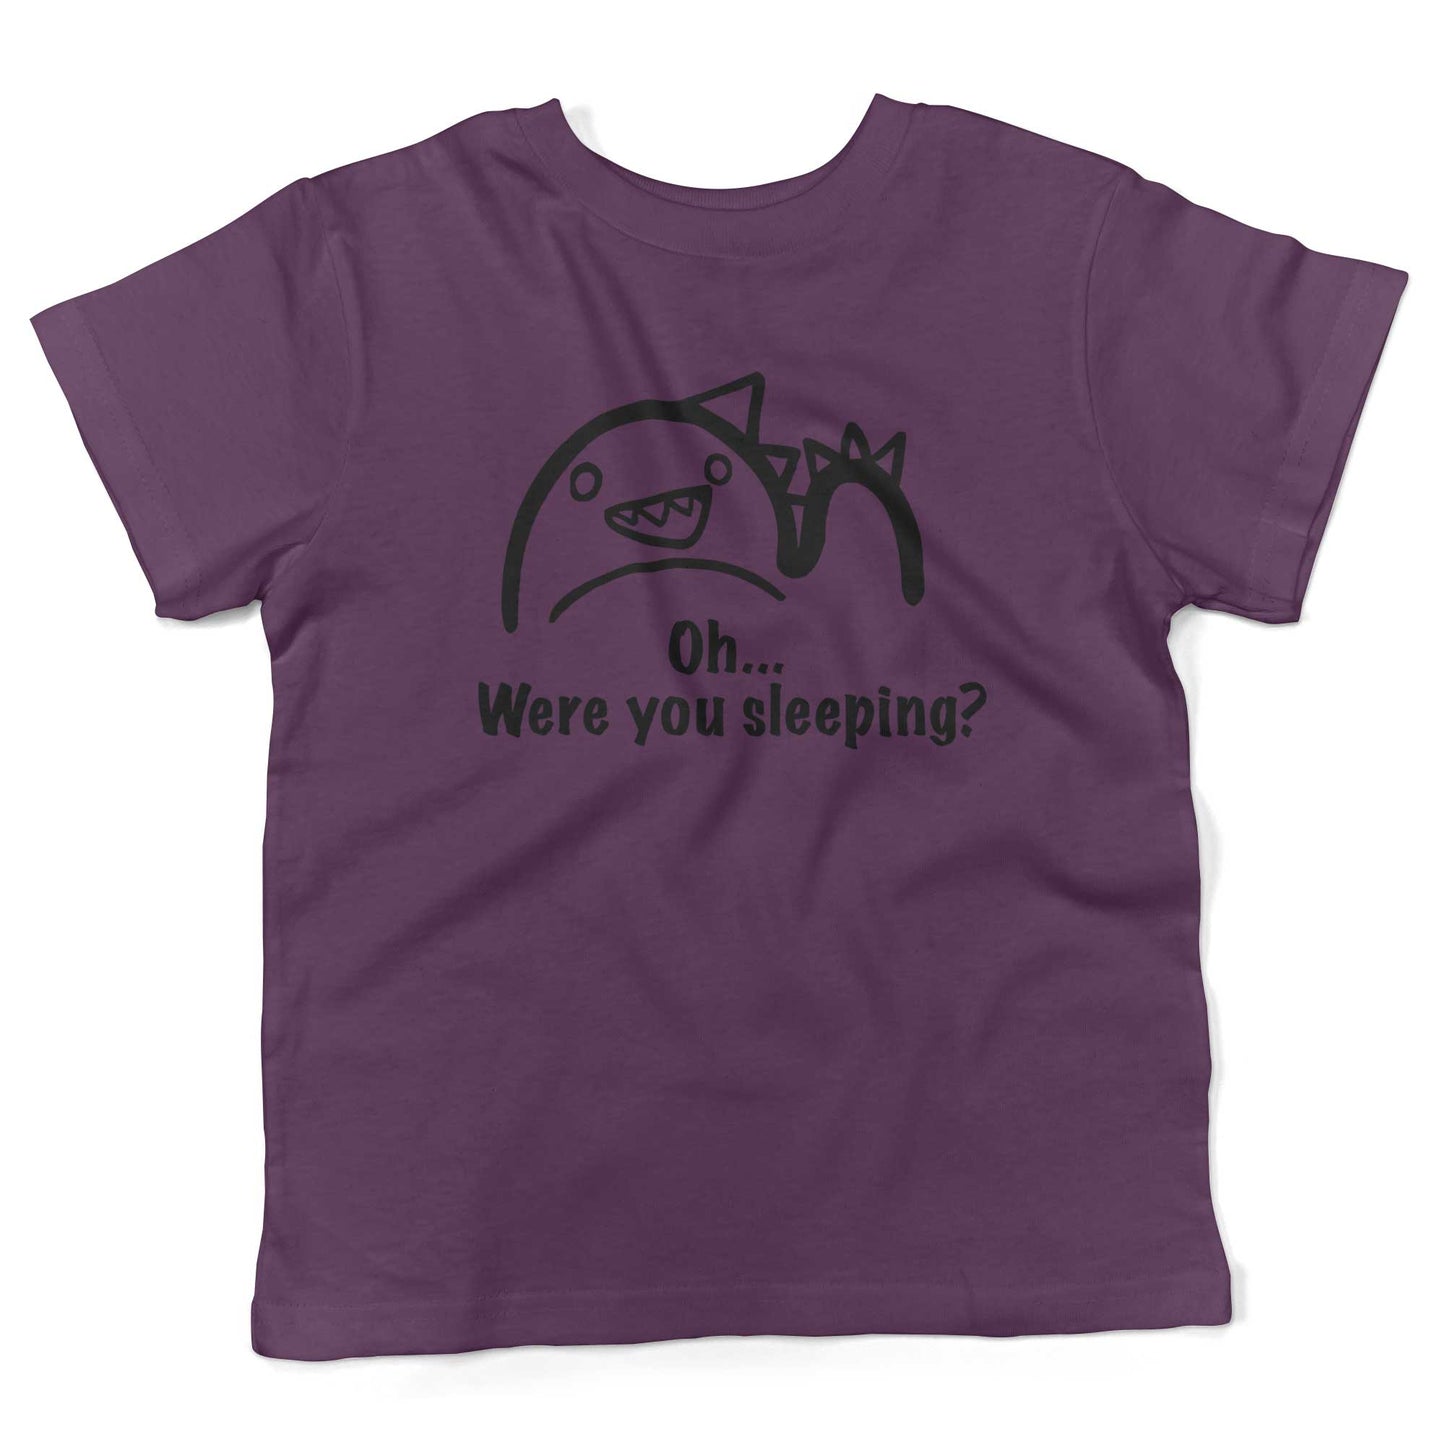 Oh...Were you sleeping? Toddler Shirt-Organic Purple-2T